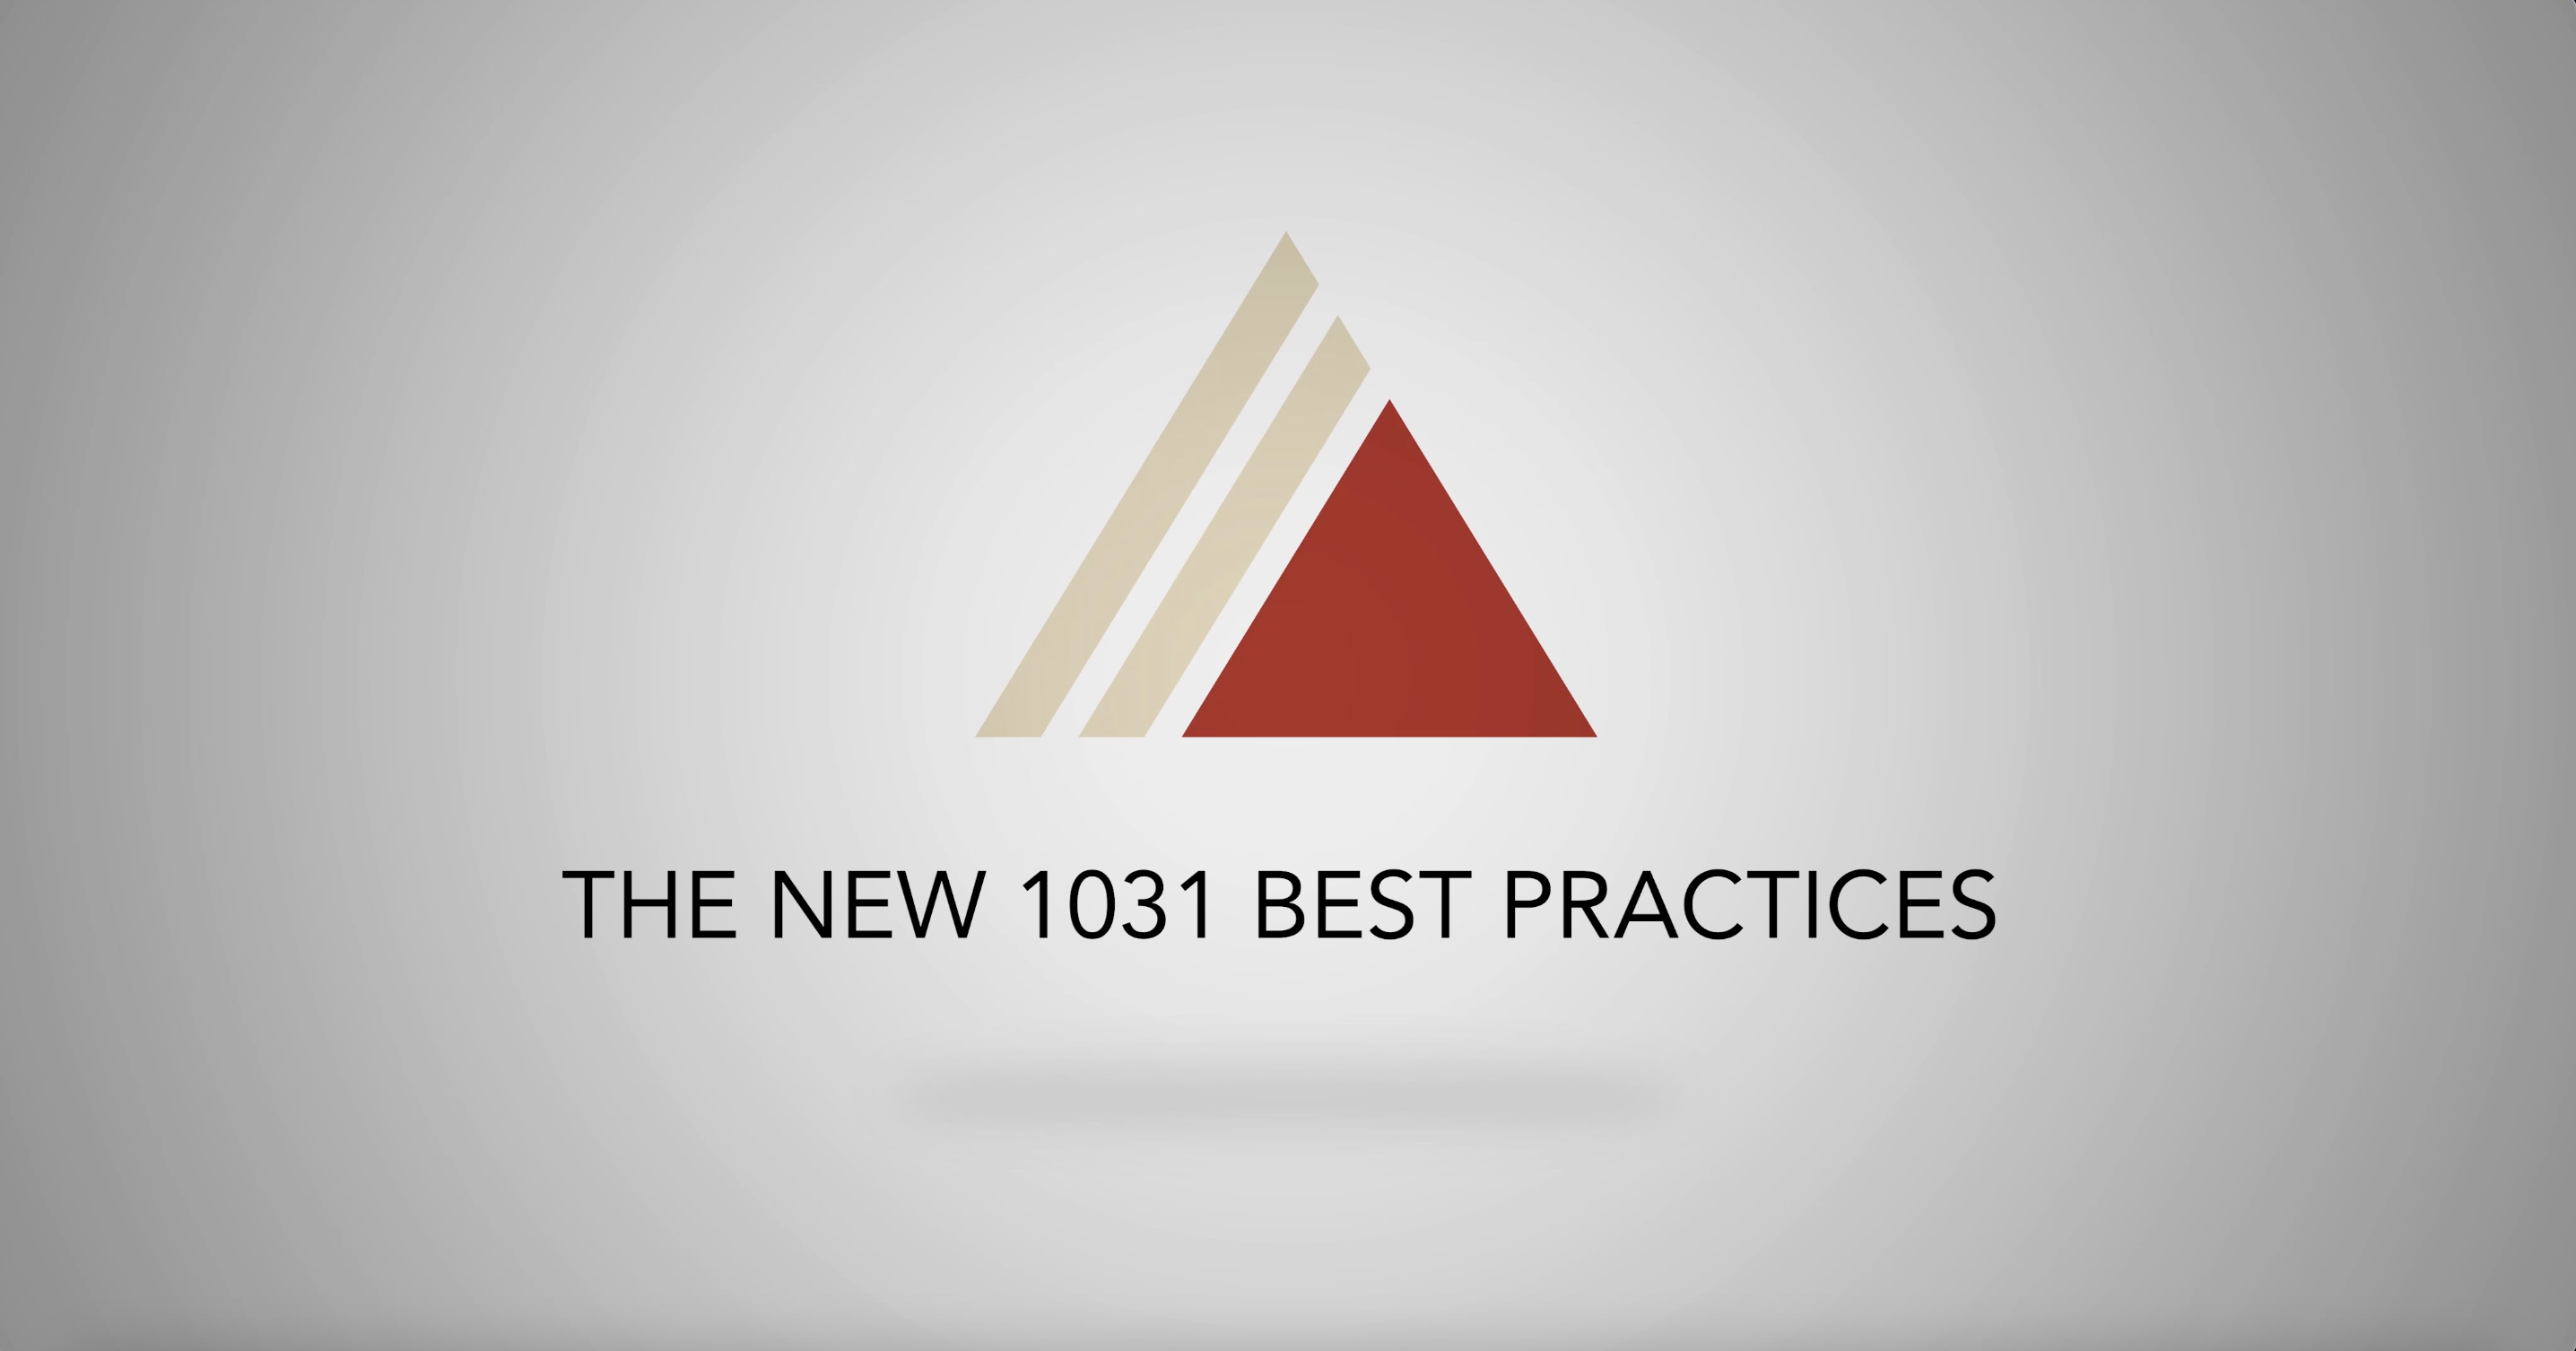 ADISA Video: The New 1031 Best Practices